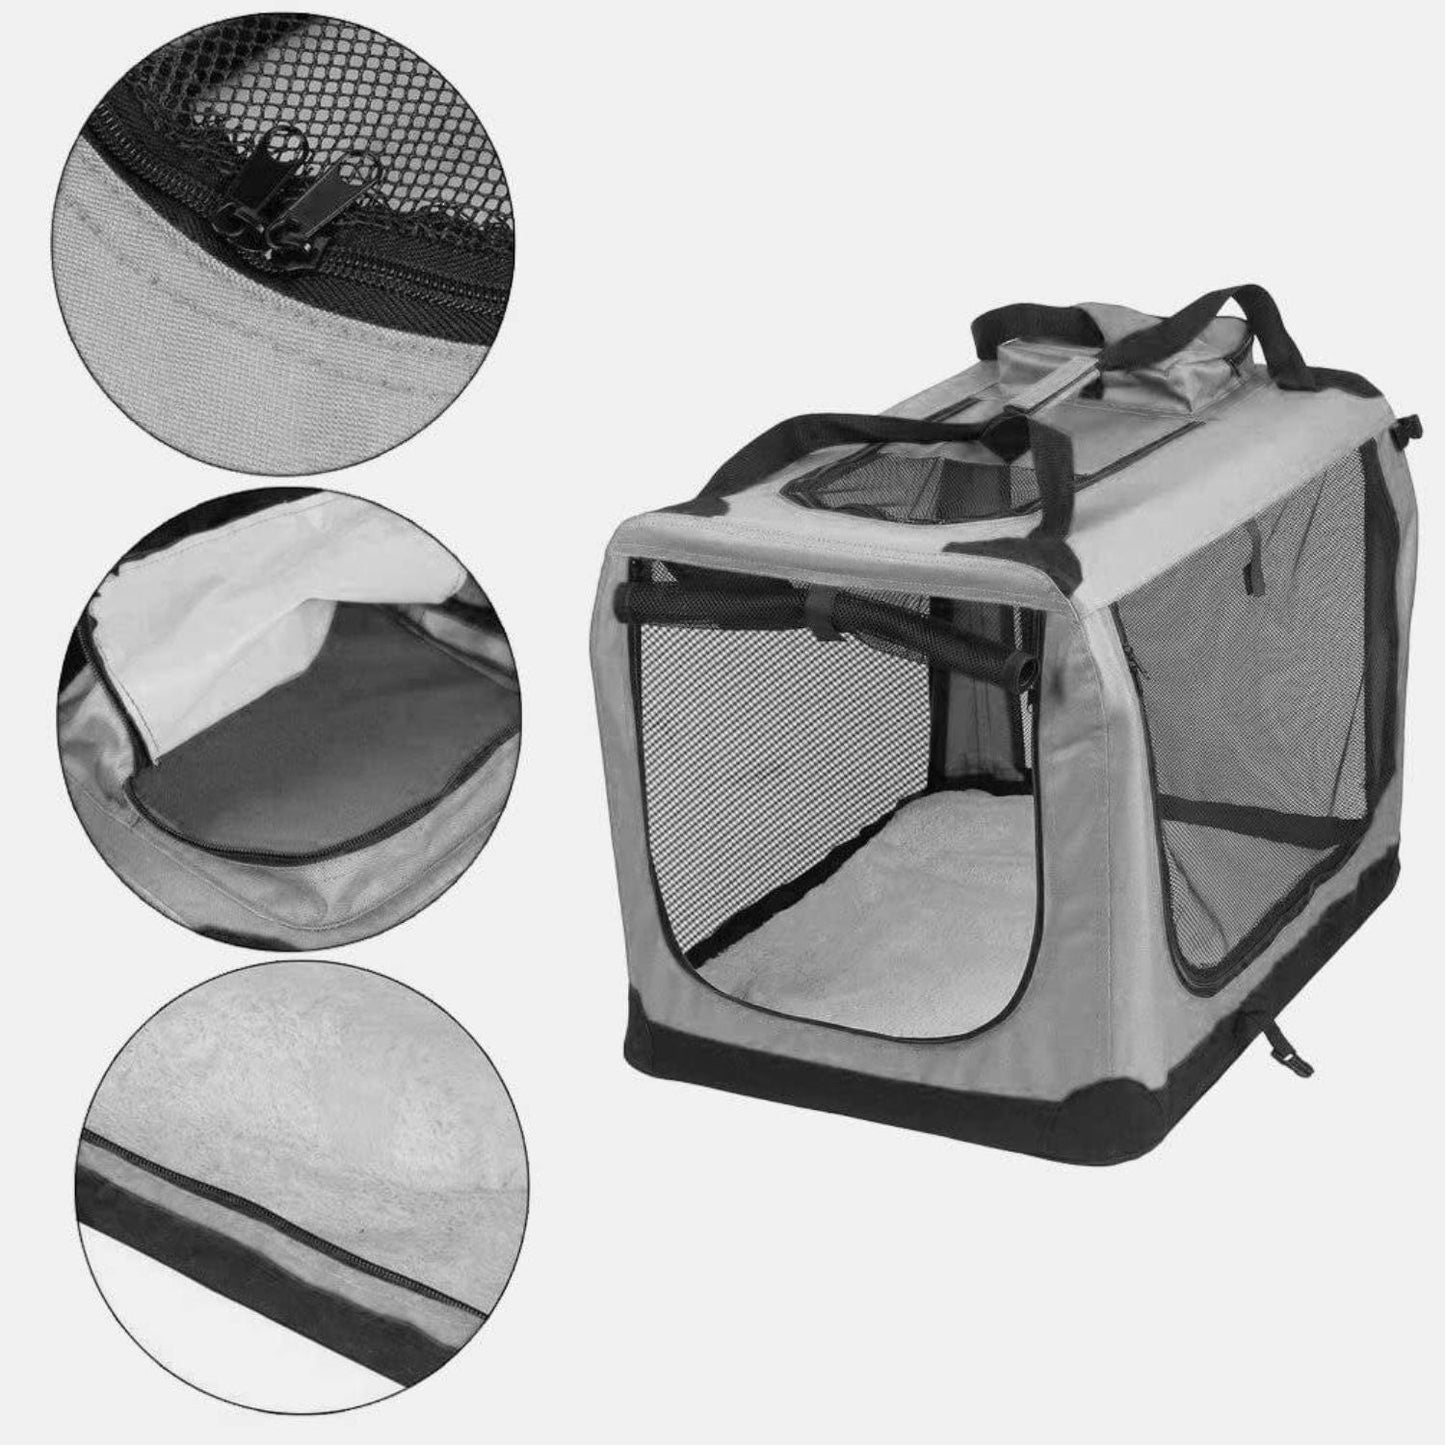 FLOOFI Portable Pet Carrier-Model 1 XL Size (Grey)